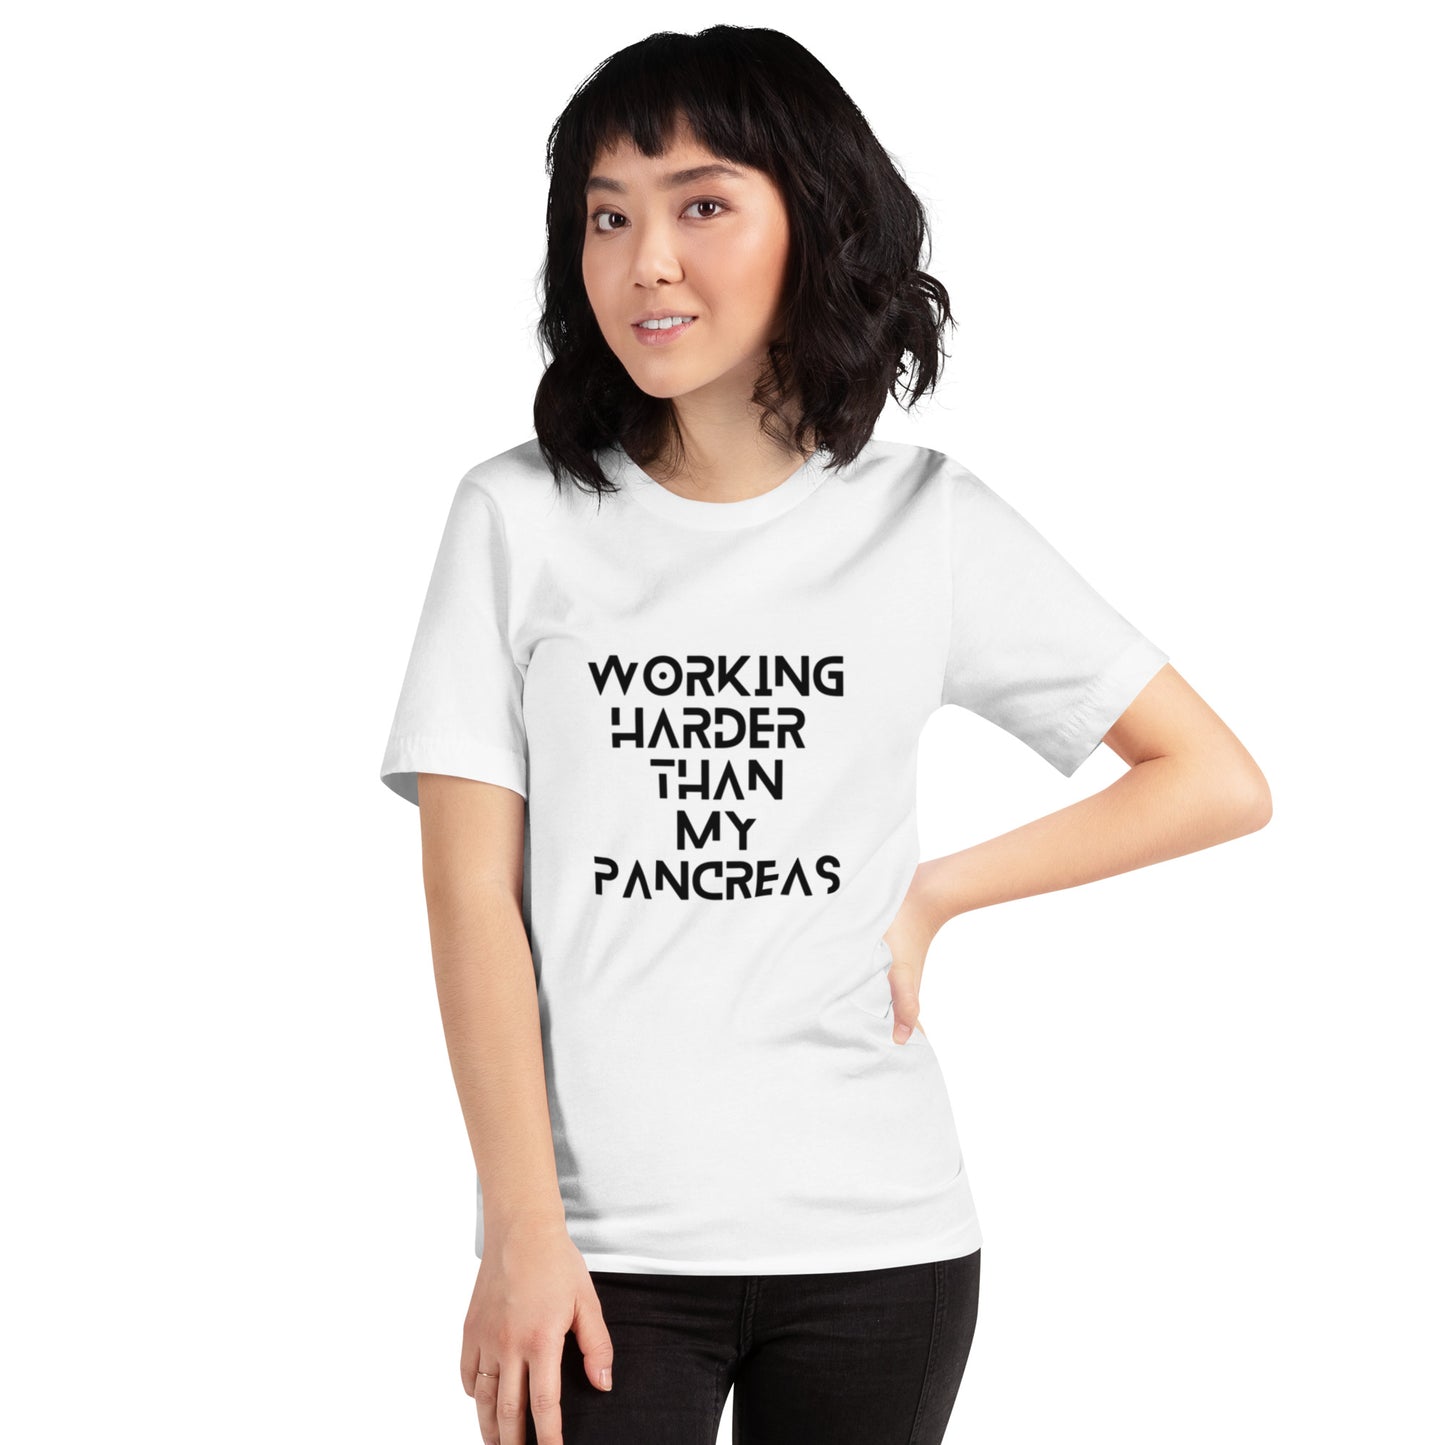 witte unisex t-shirt 'working harder than my pancreas'